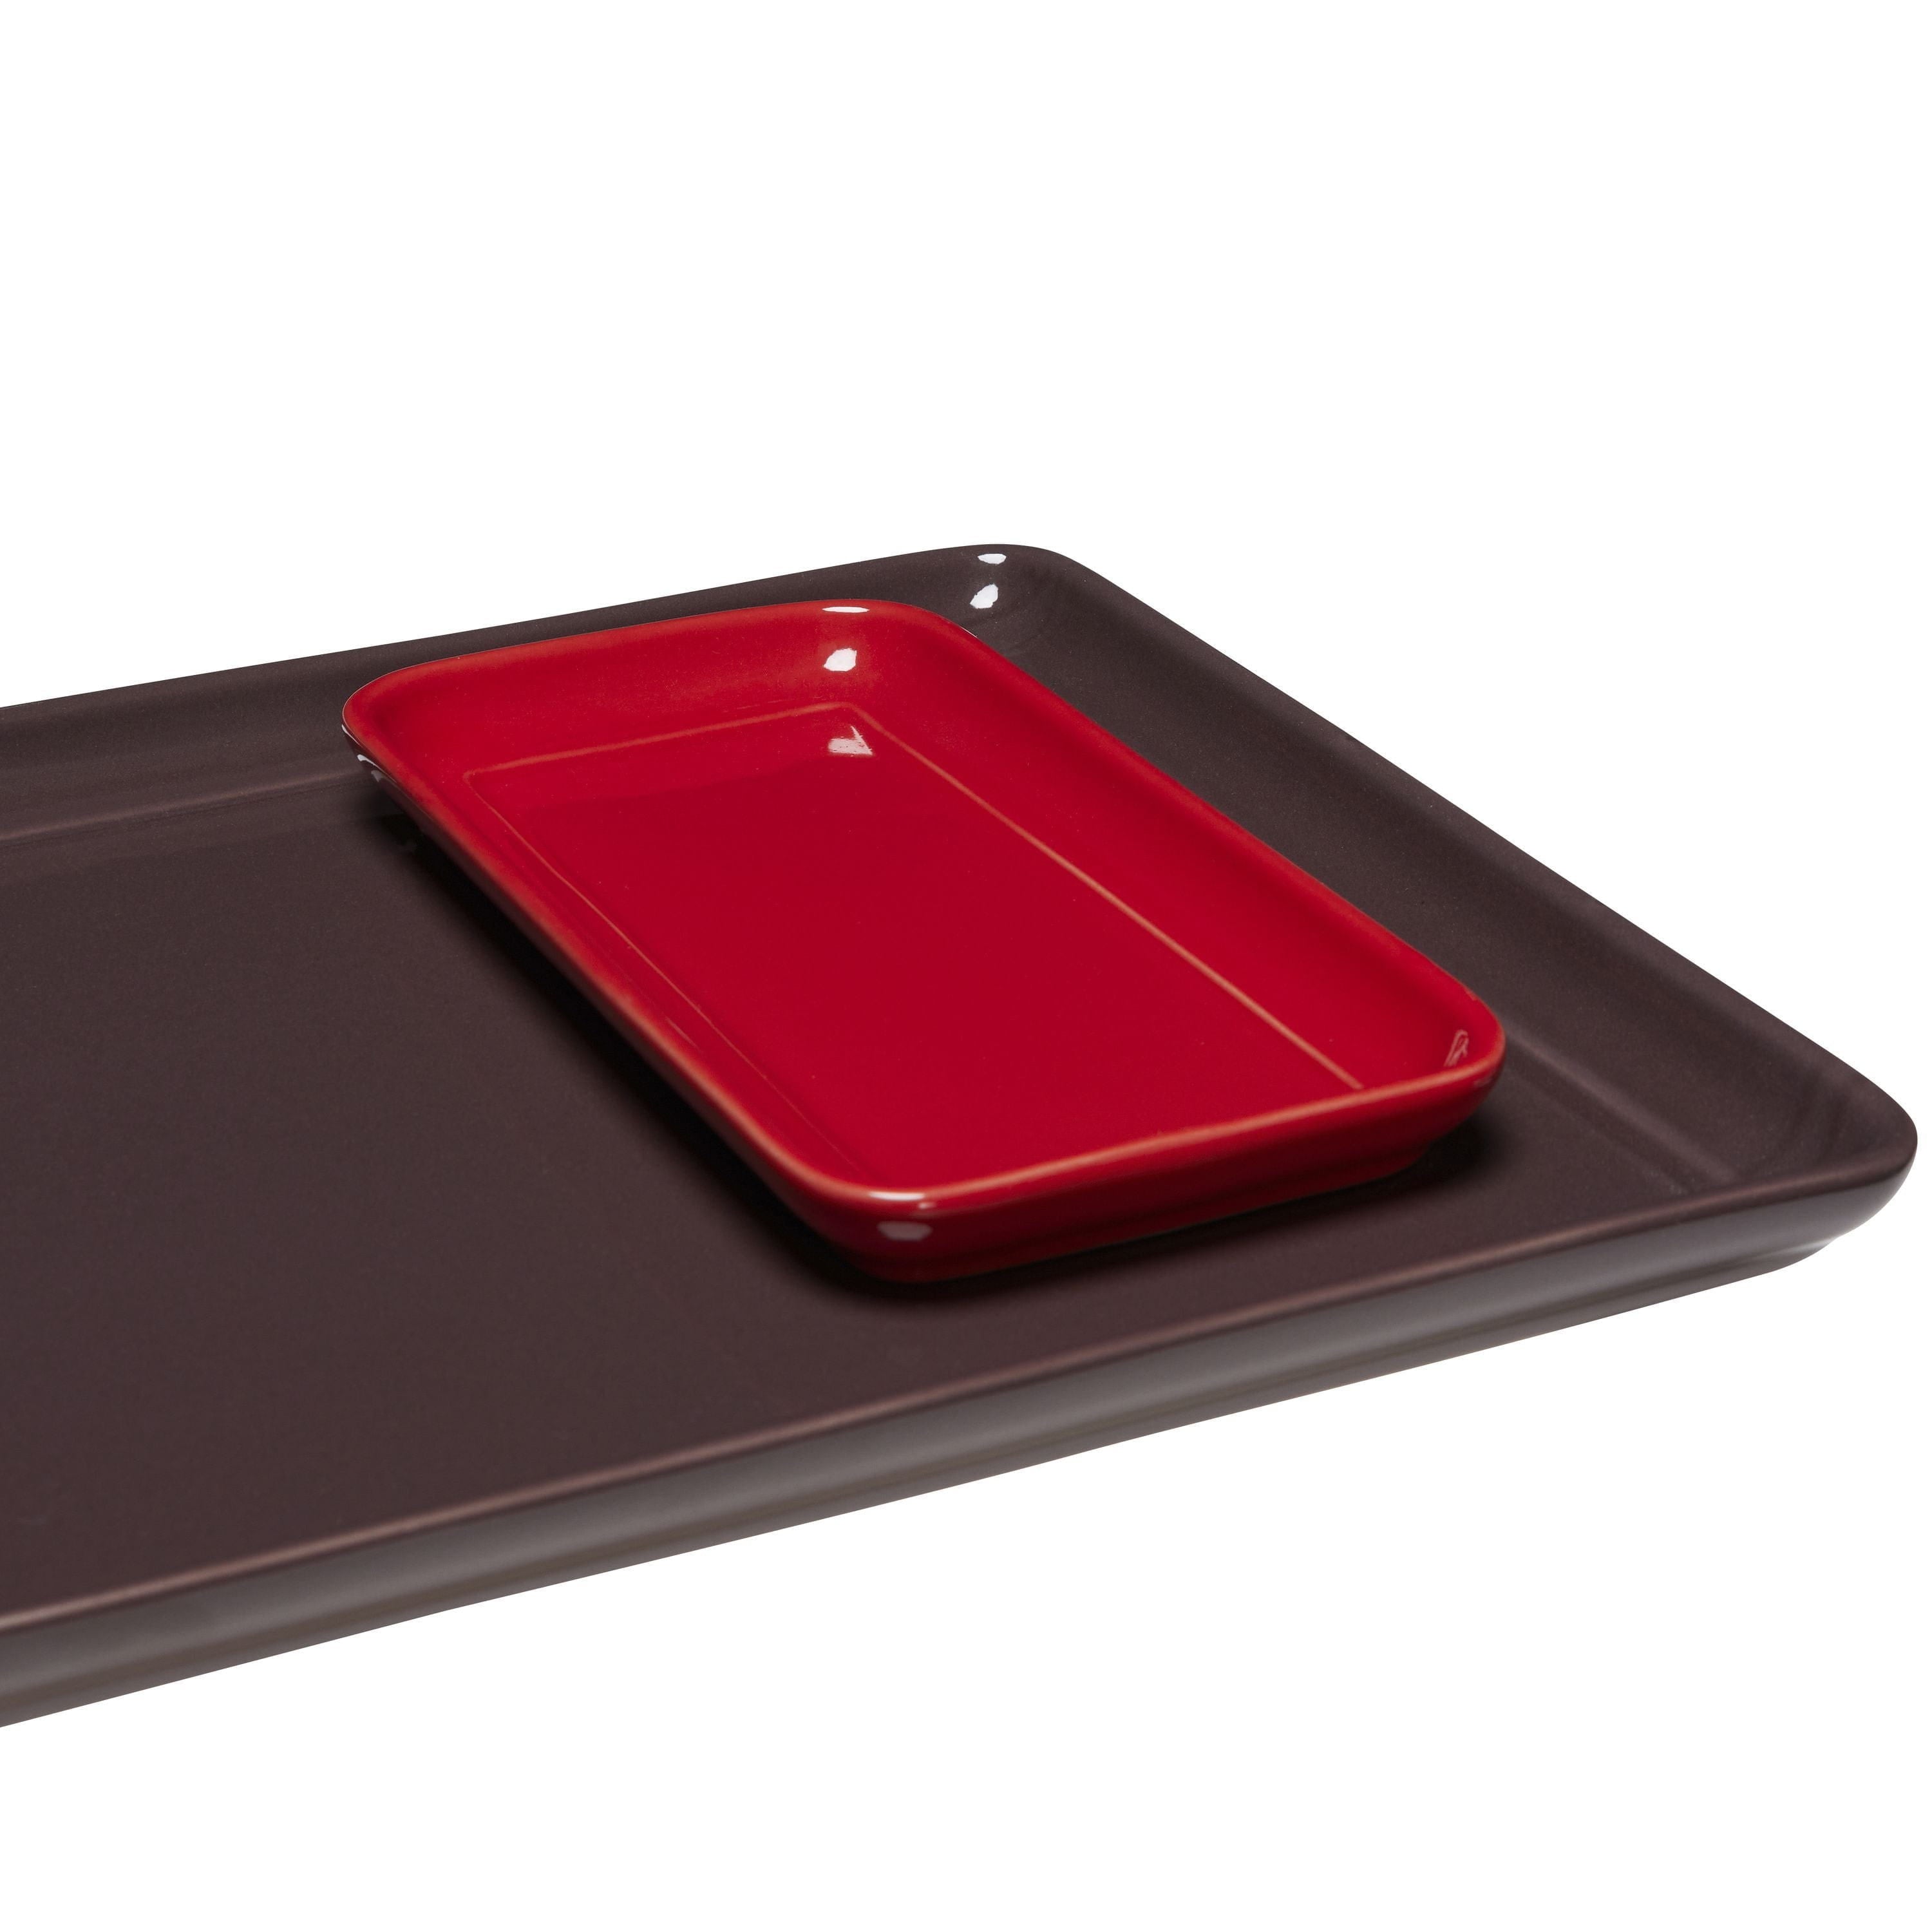 Hübsch Amare Tablett Set of 2, Bourgogne/Red